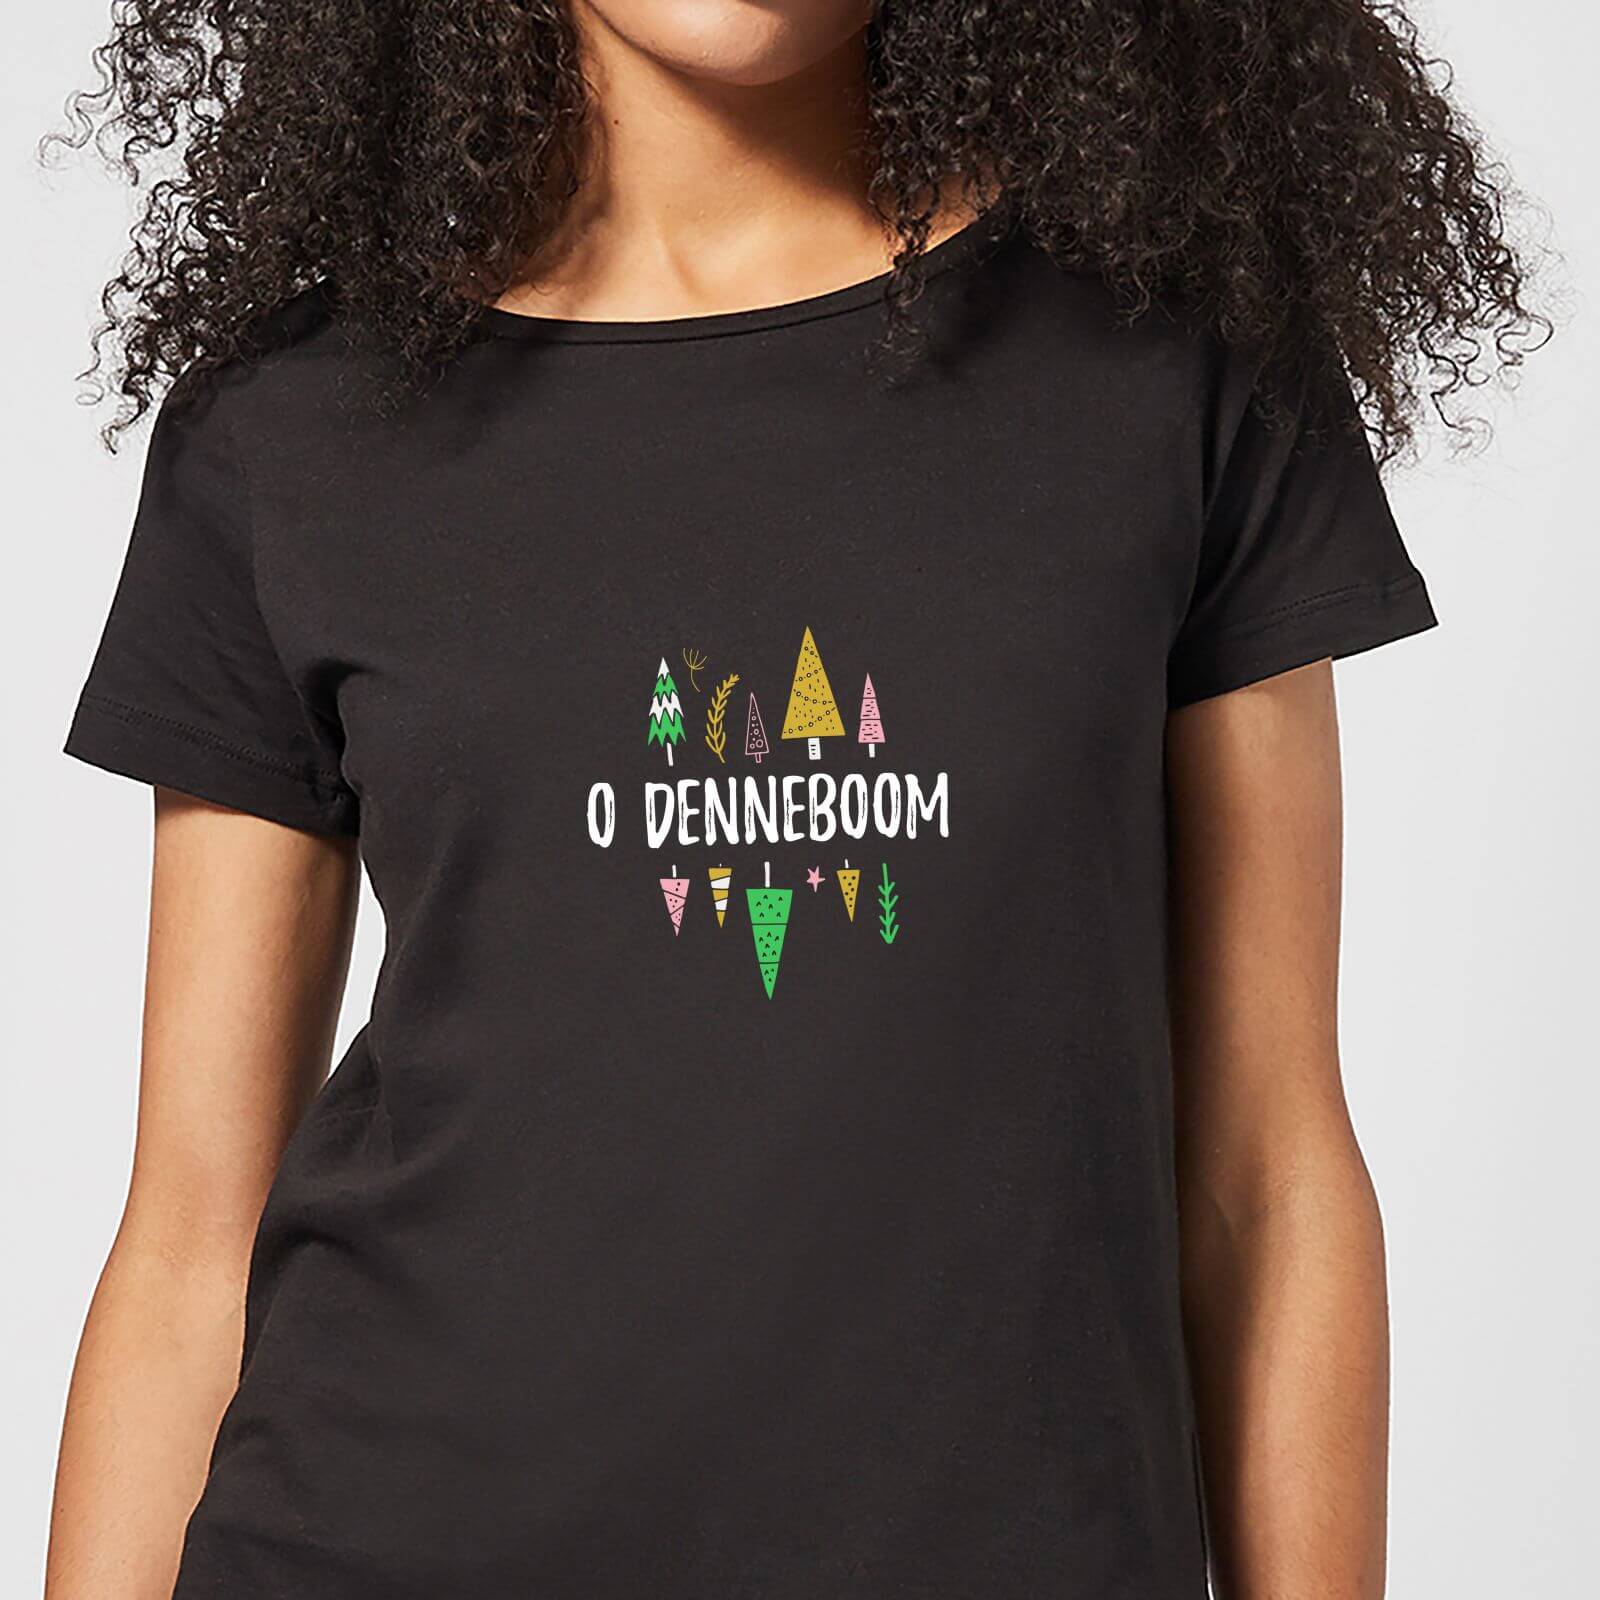 O Denneboom Women's T-Shirt - Black - 3XL - Black